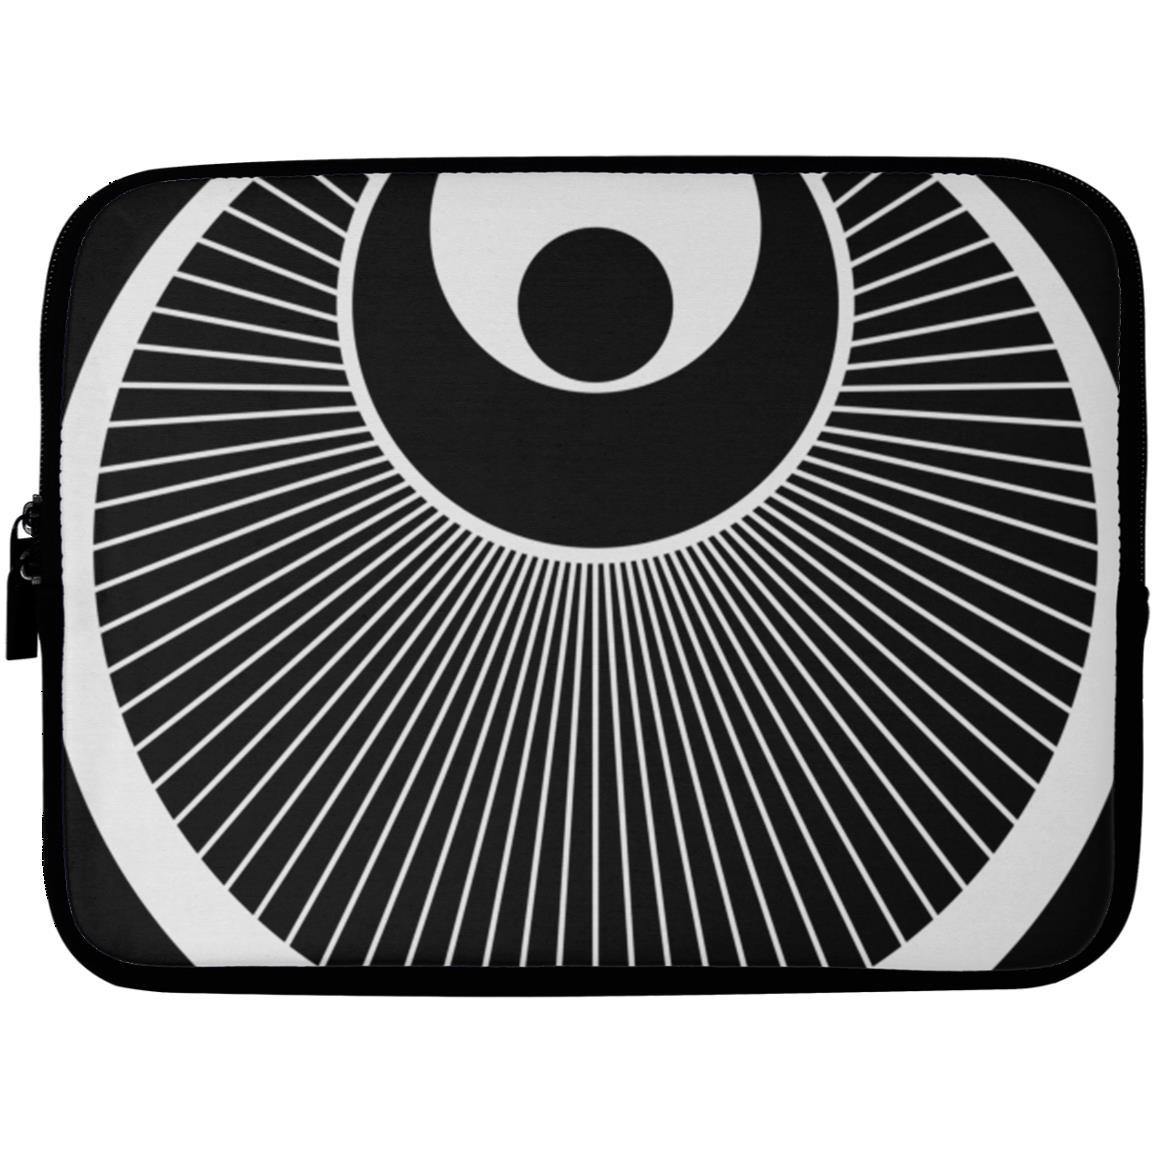 Crop Circle Laptop Sleeve - Gog Magogs - Shapes of Wisdom